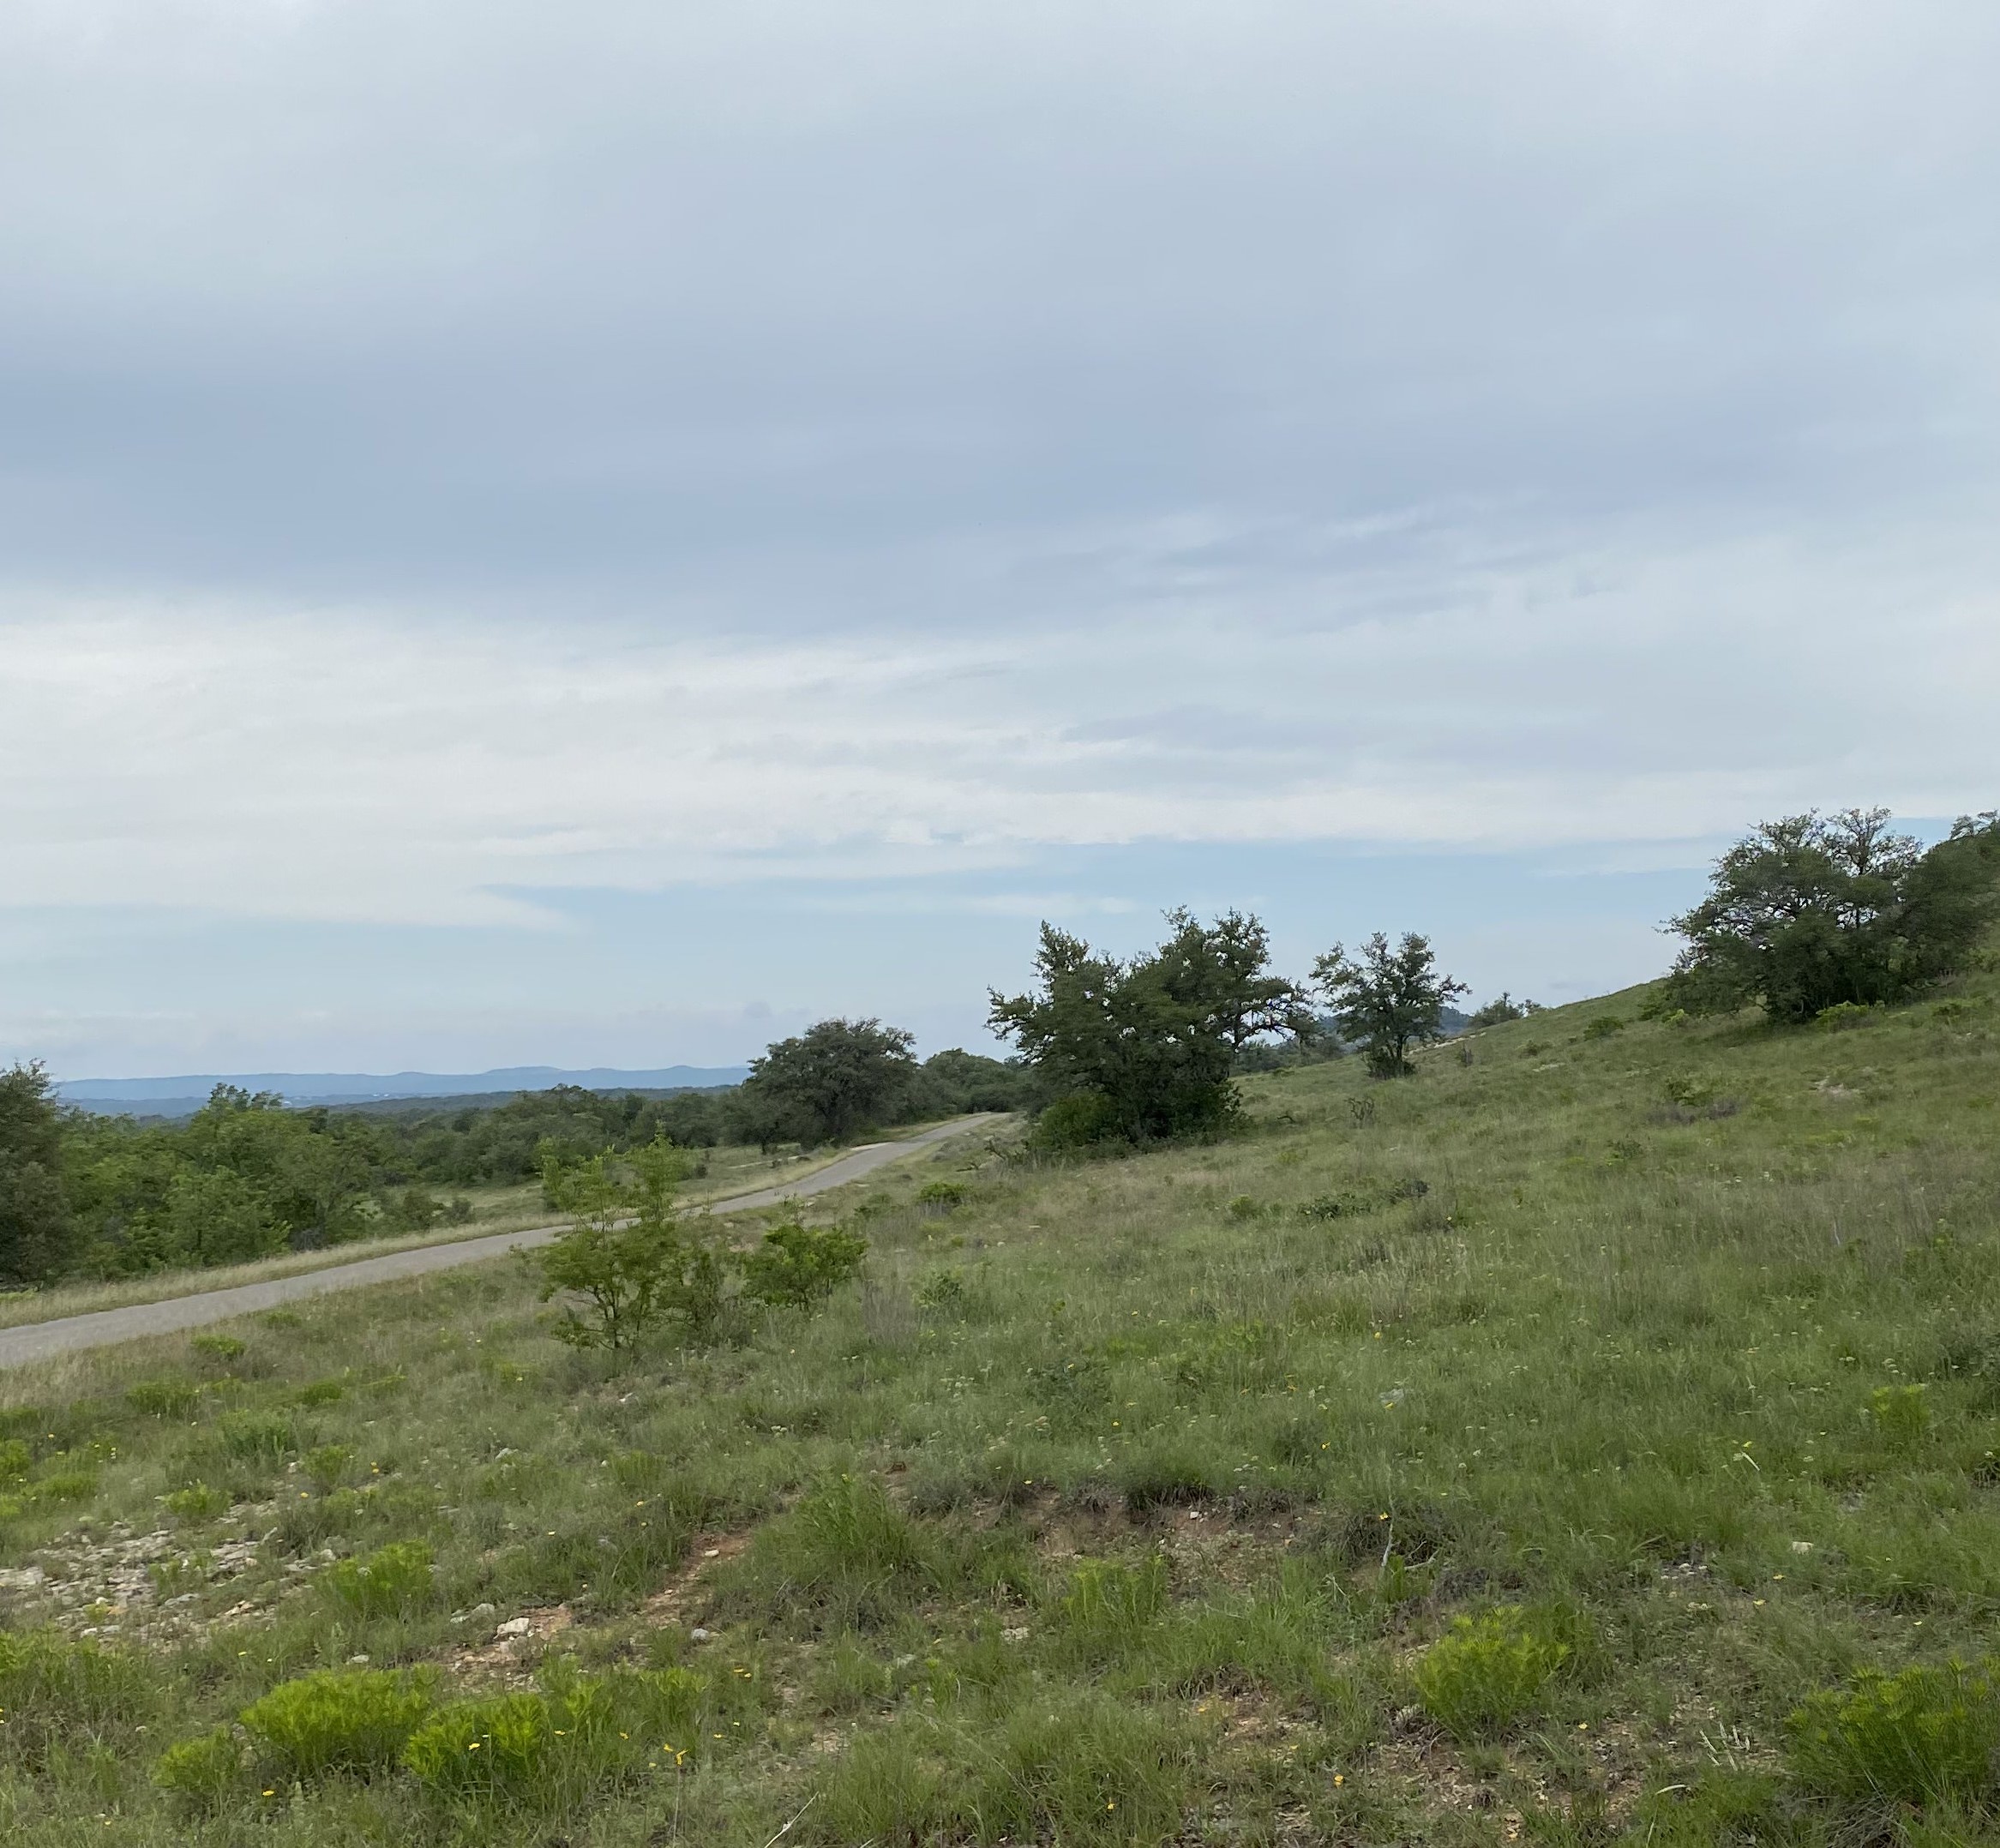 Rugged landscape on Selah Ranch in Johnson City, Texas.